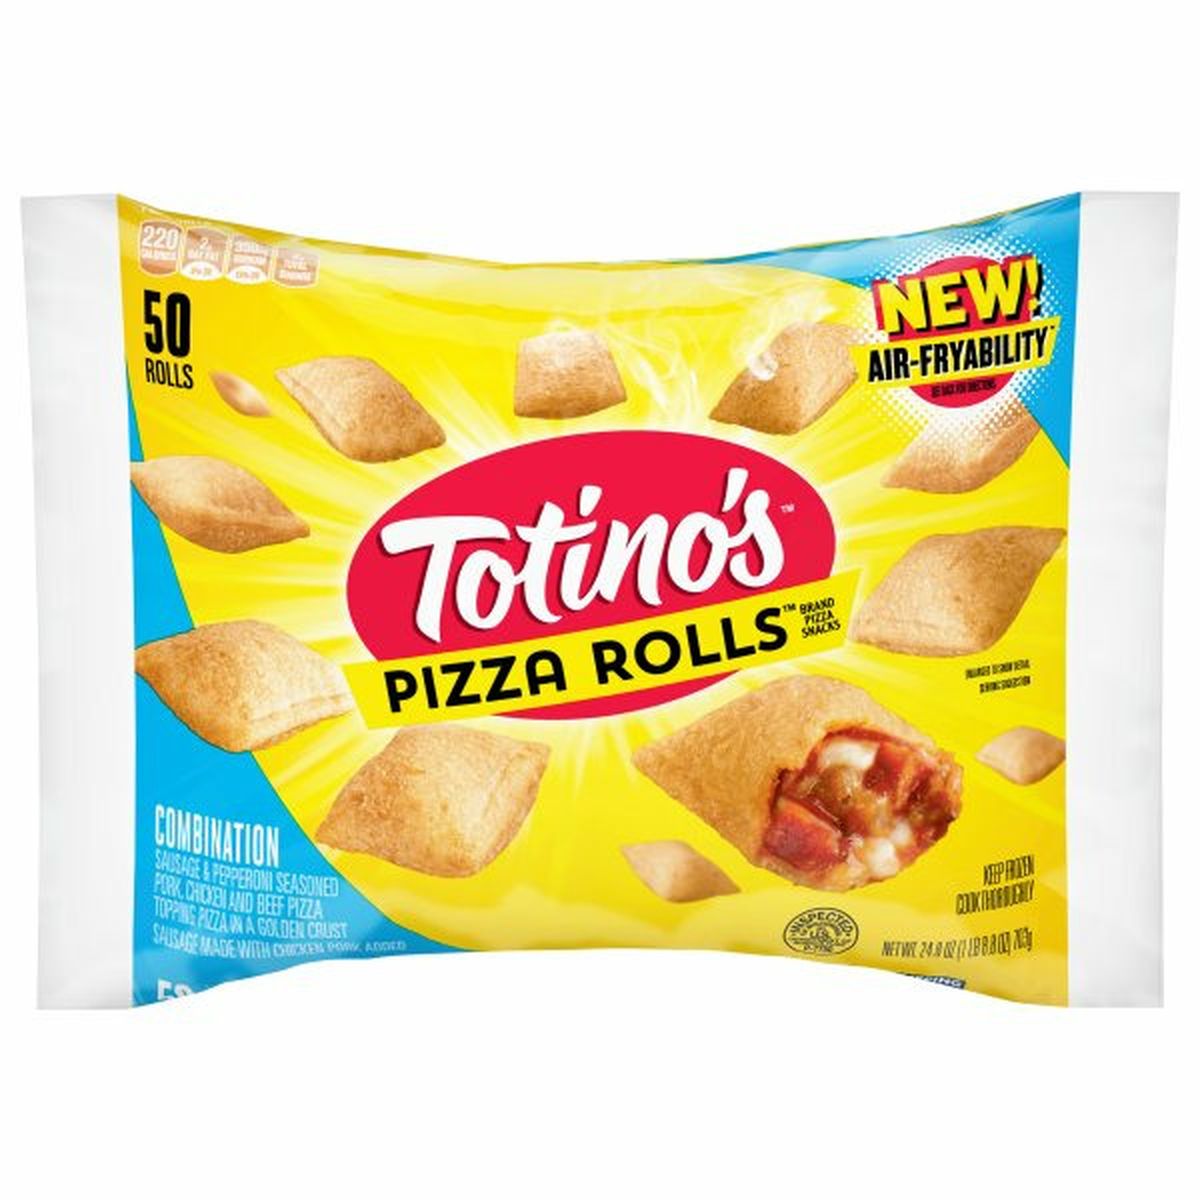 Calories in Totino's Pizza Rolls, Combination